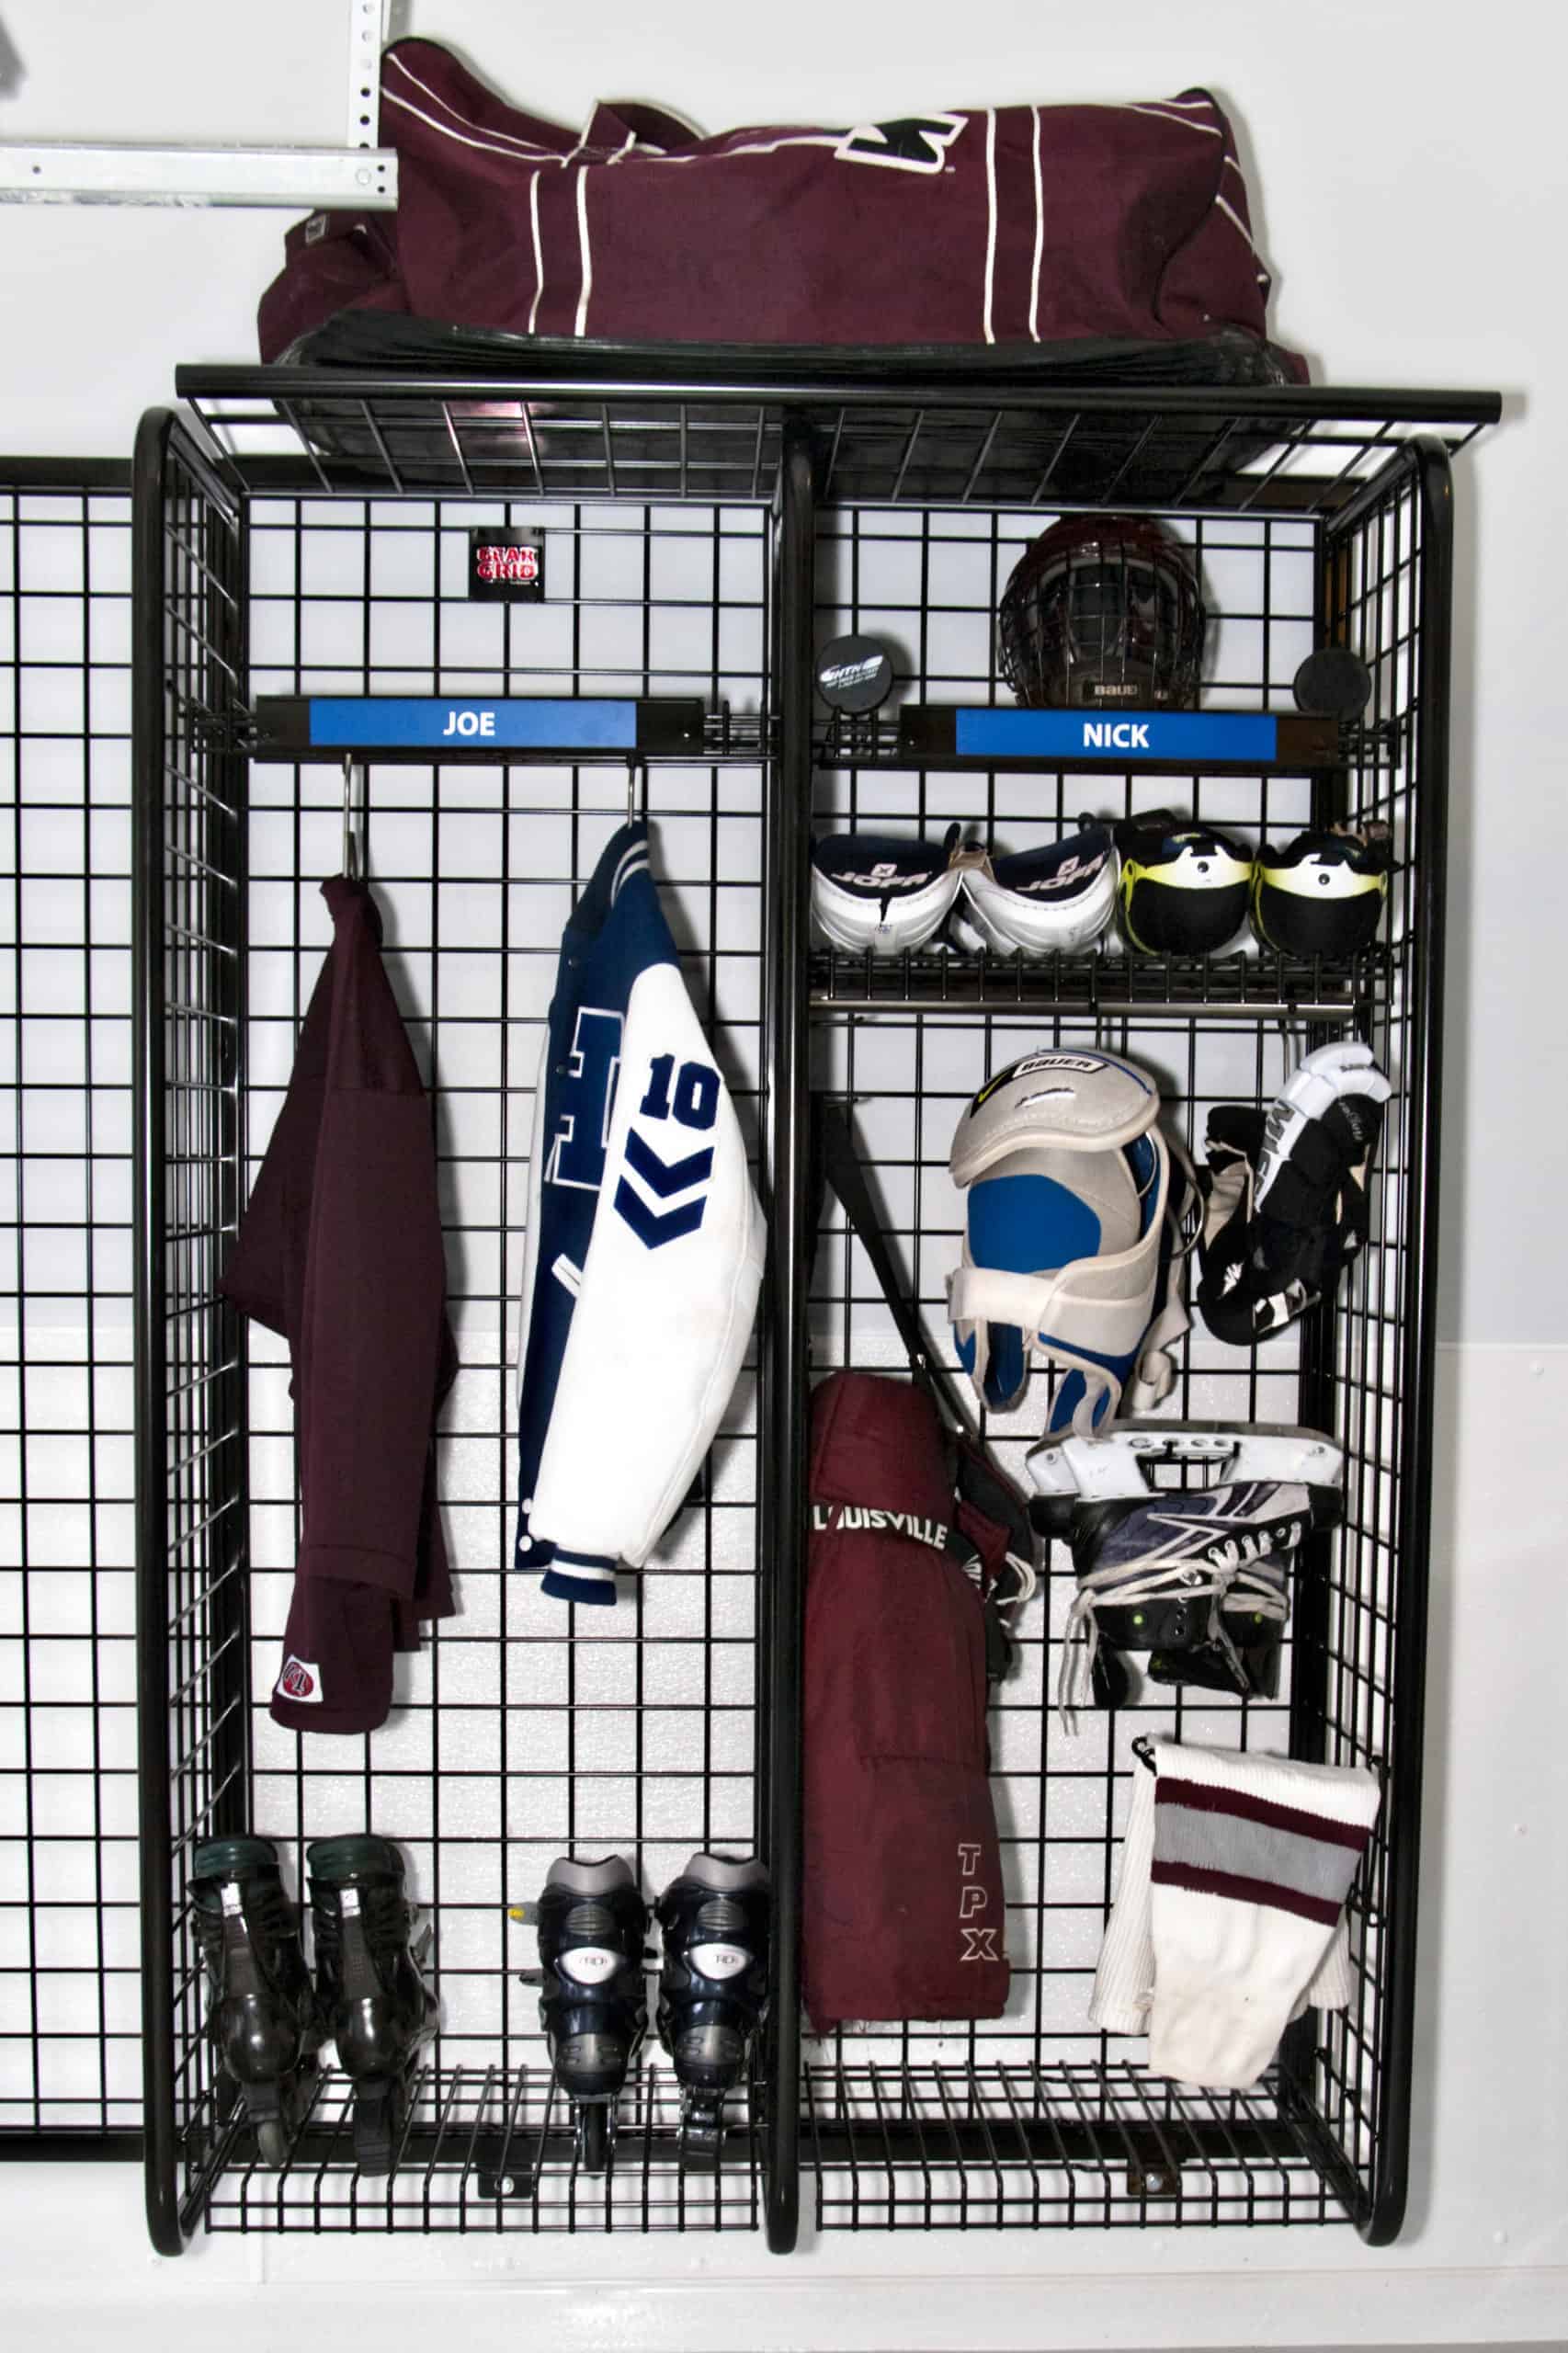 Hockey Equipment Storage,hockey Gear Drying Rack,garage Storage